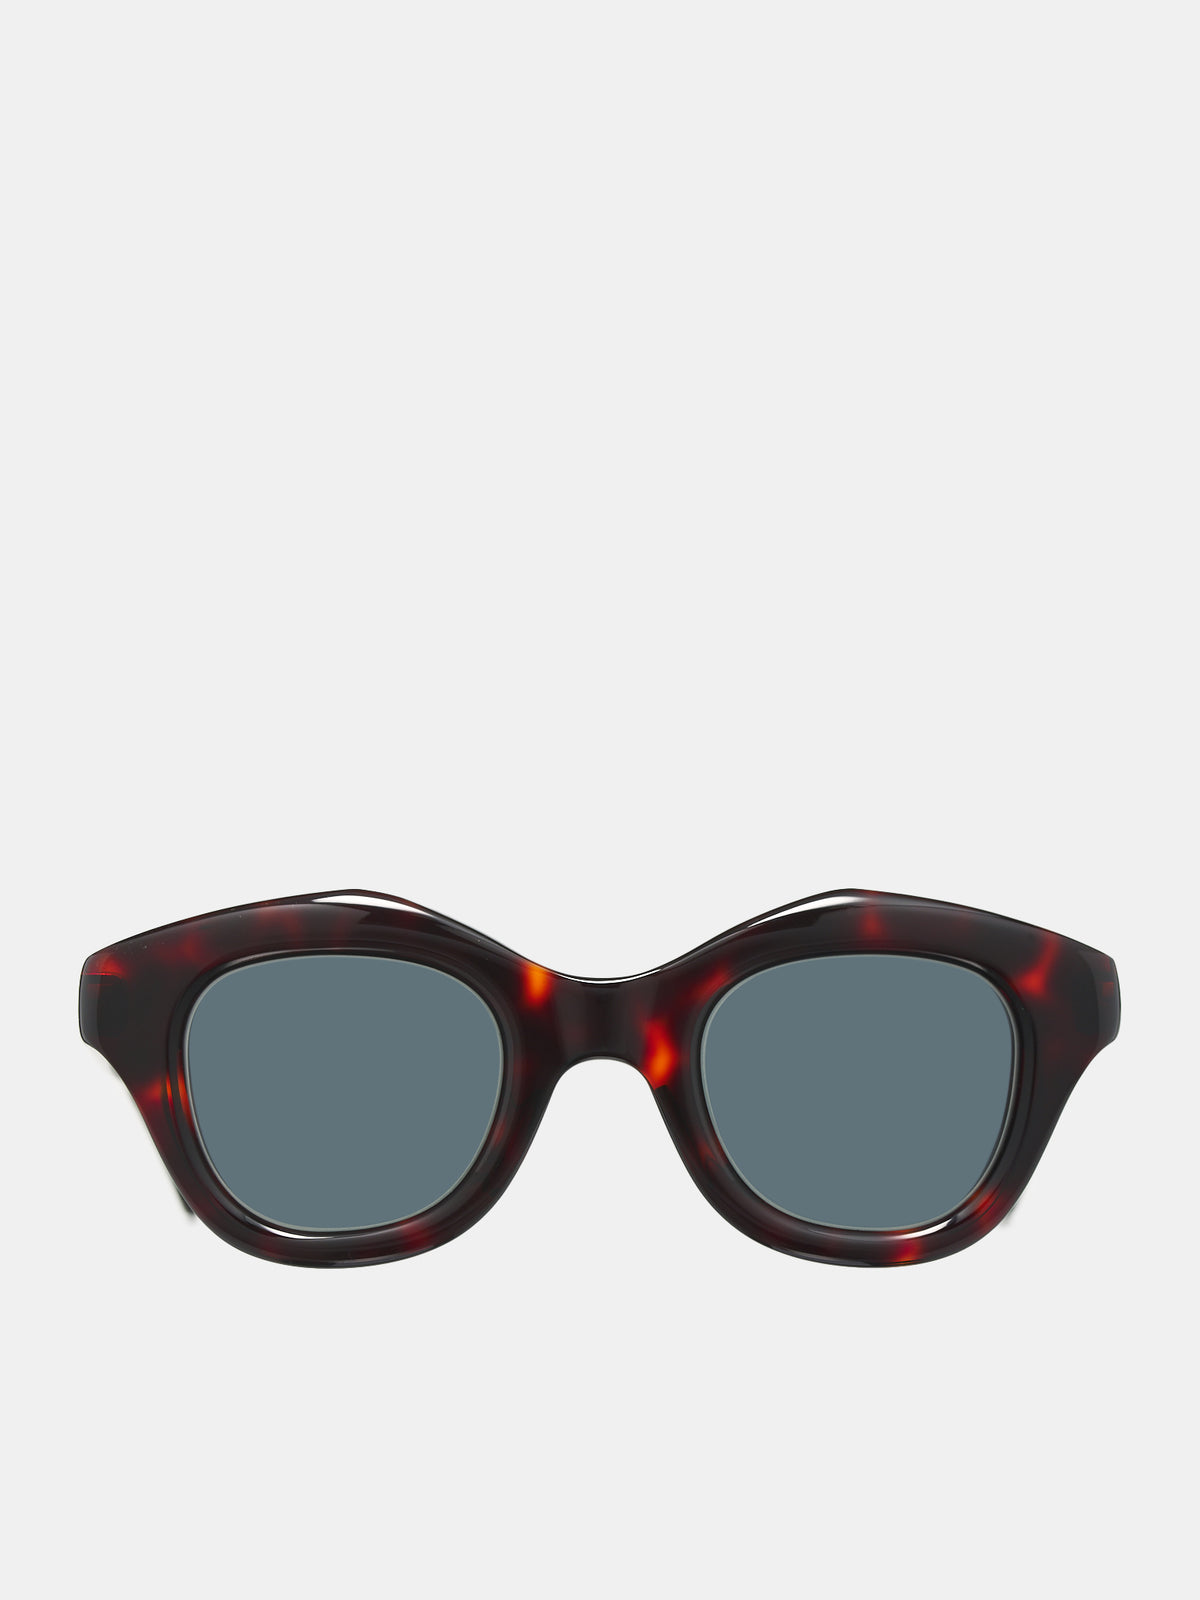 Hook Sunglasses (HOOK-TORTSHELL-GRAY4)